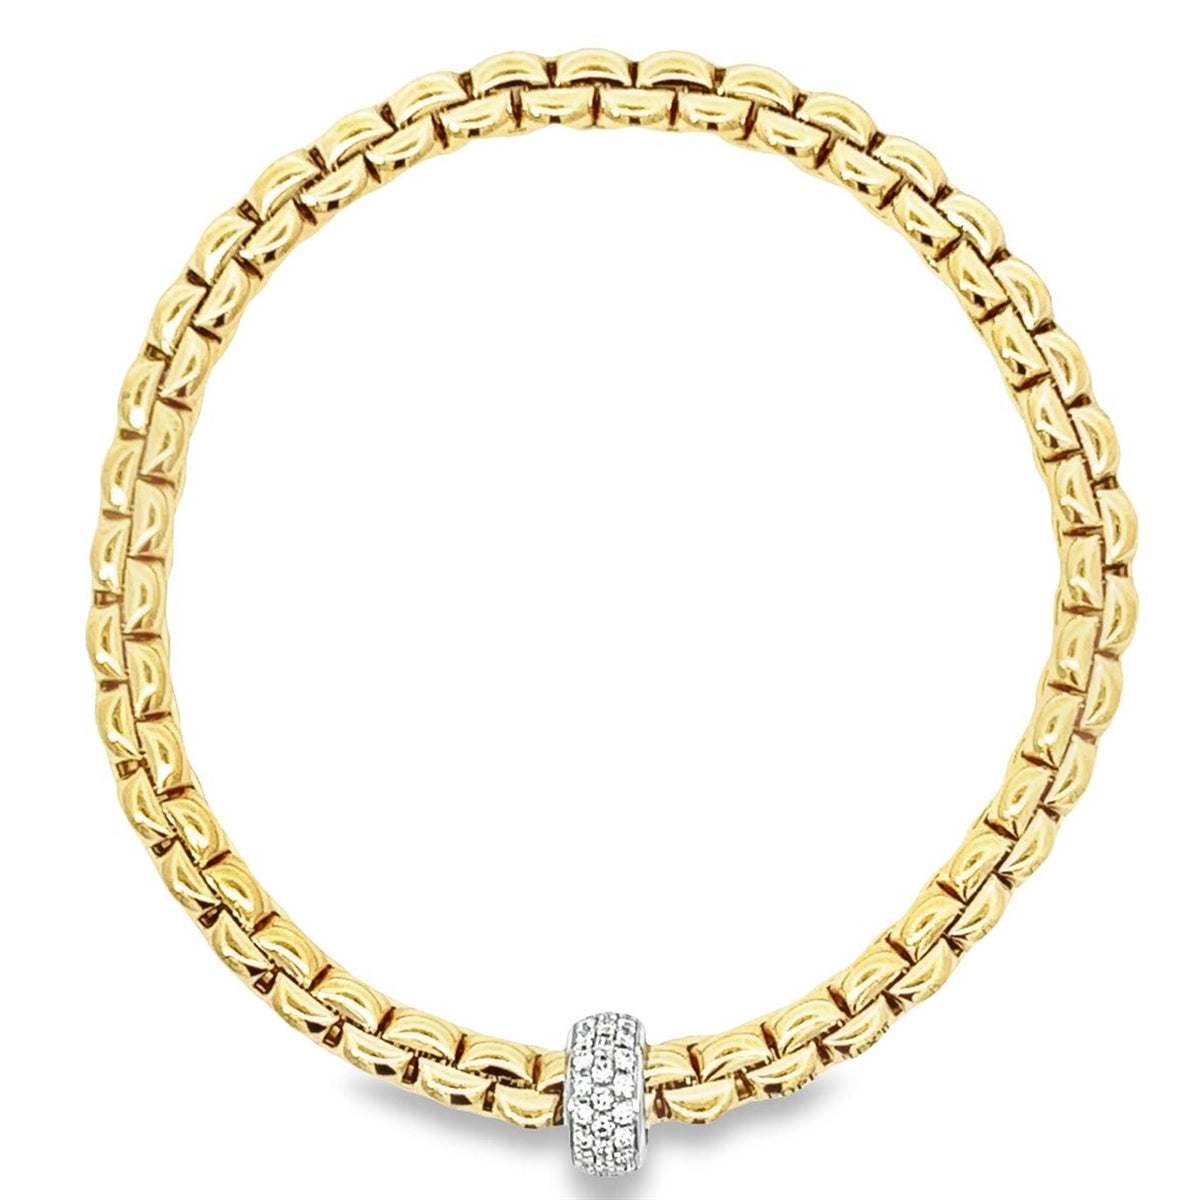 FOPE 18Kt Yellow Italian Gold EKA Flexible Bracelet with .37cttw Diamonds